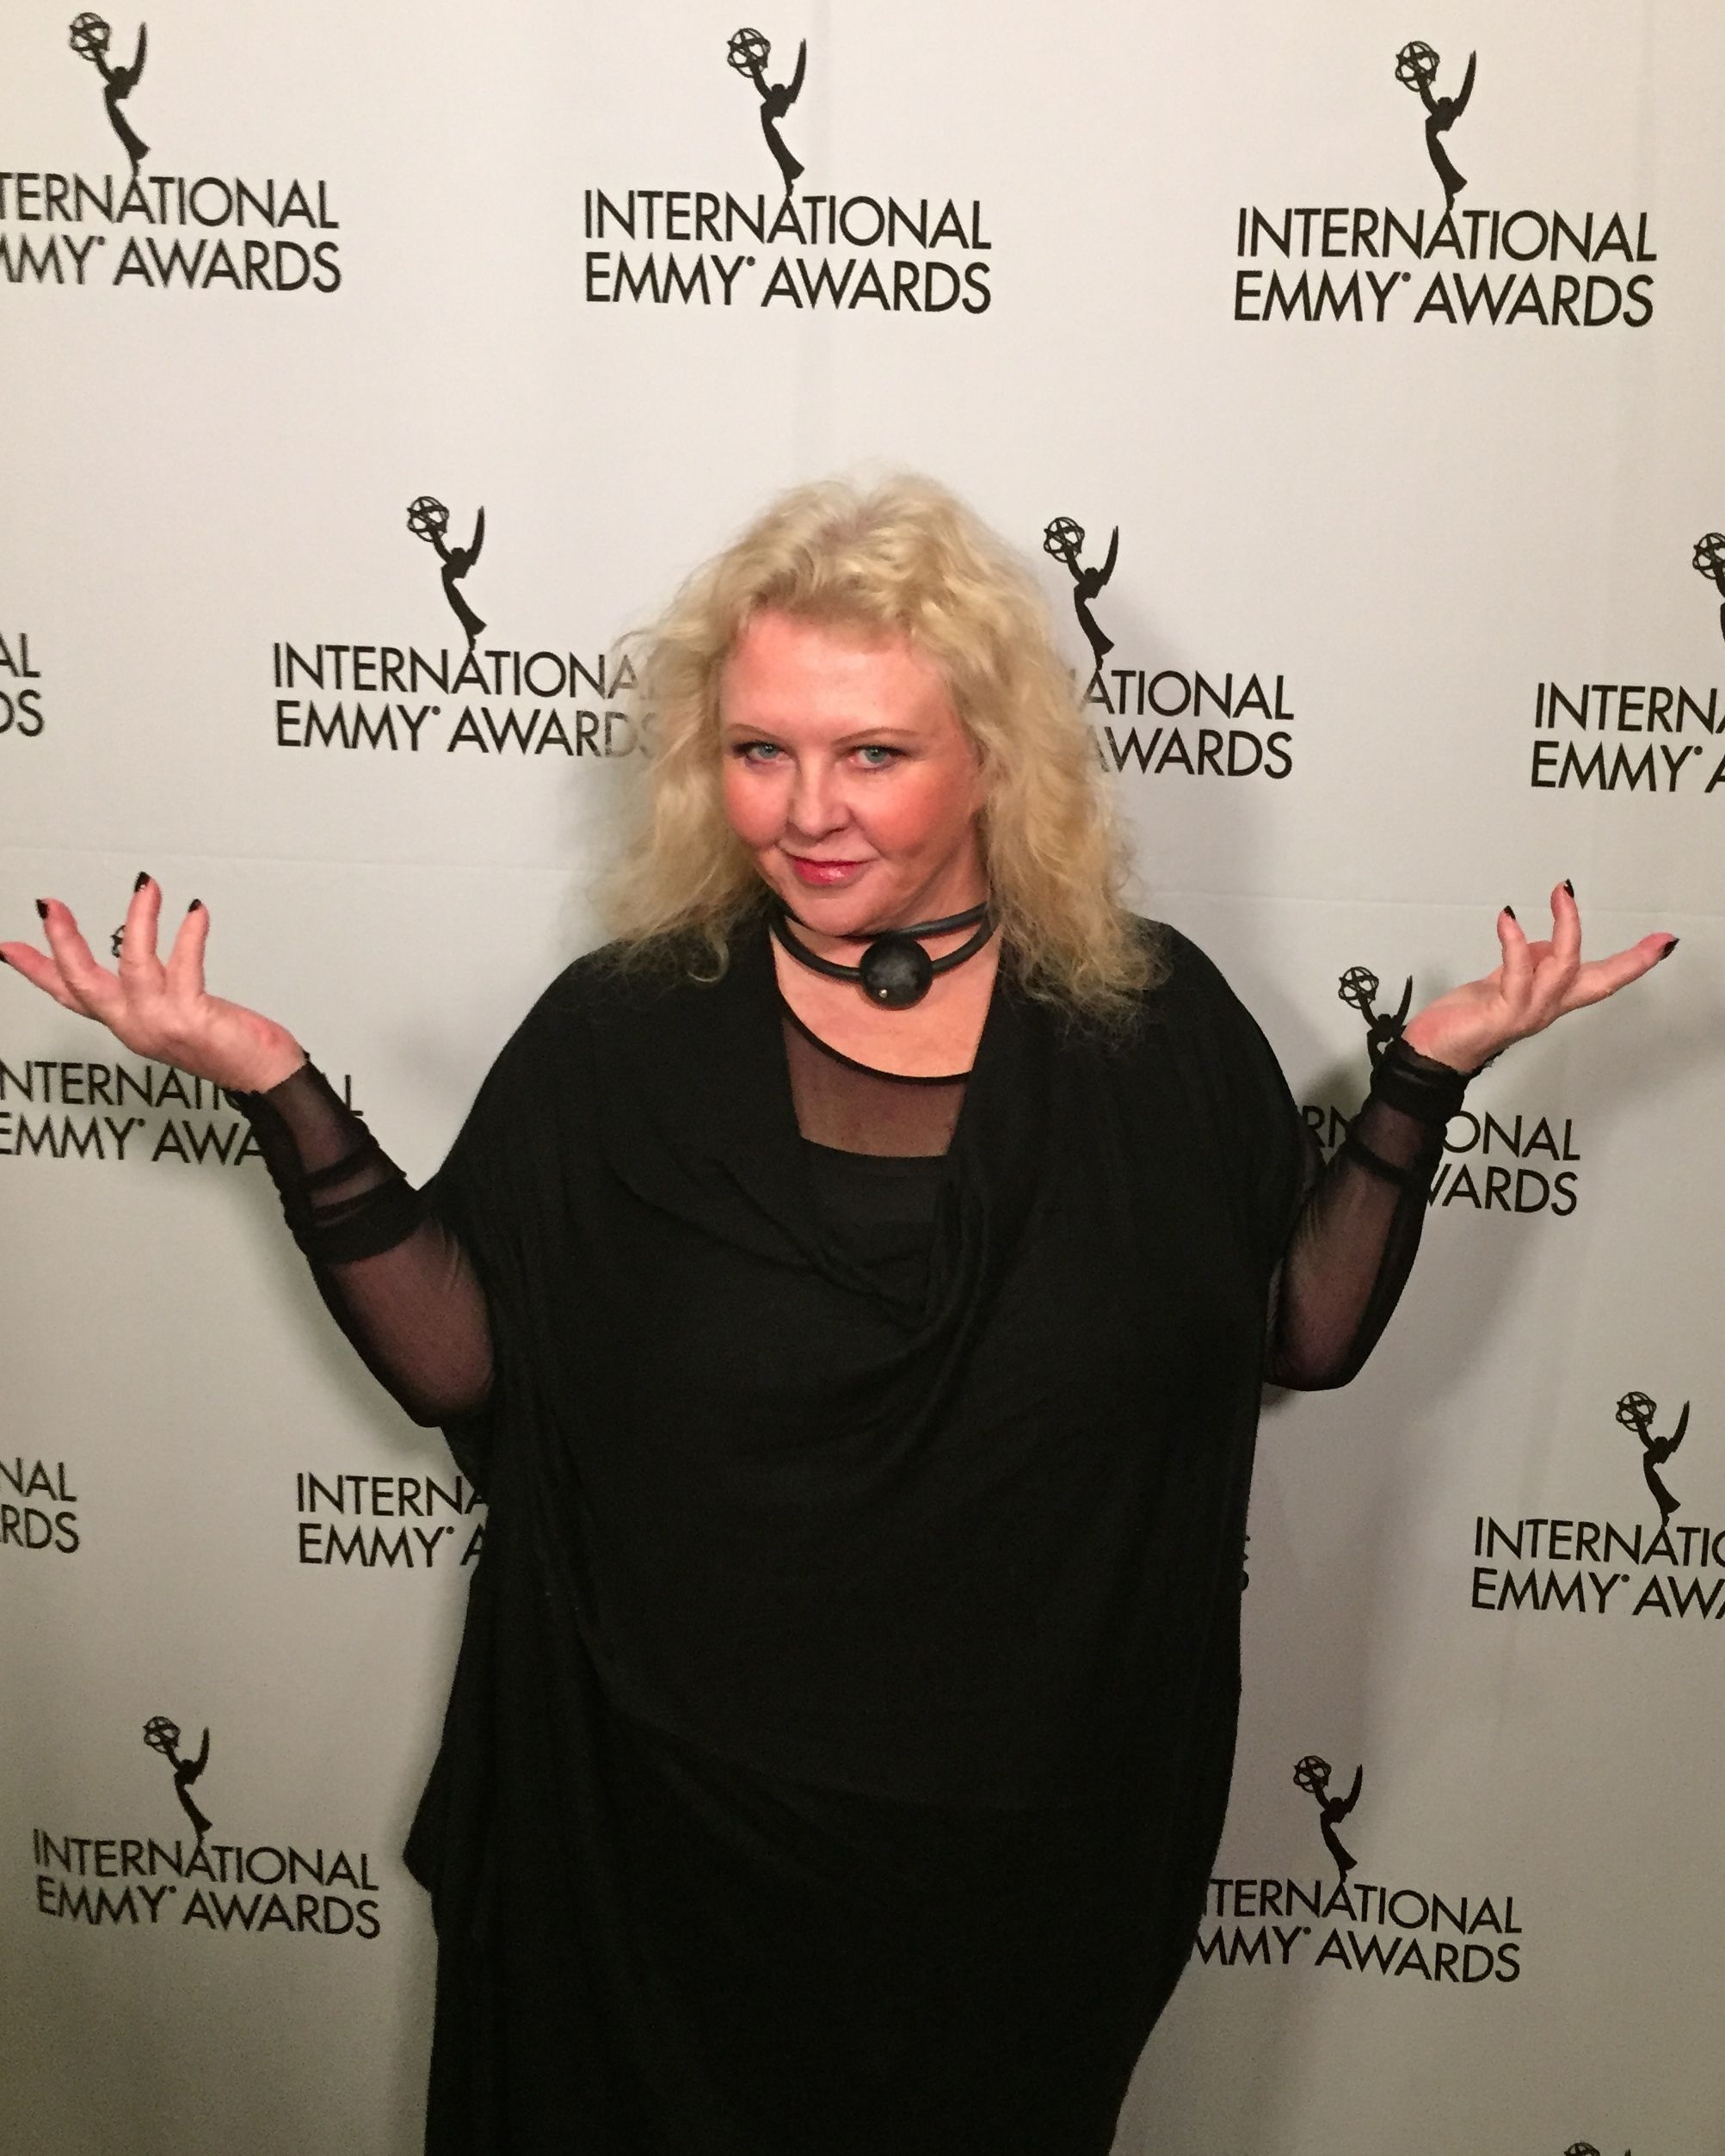 42nd International Emmy Awards - NYC